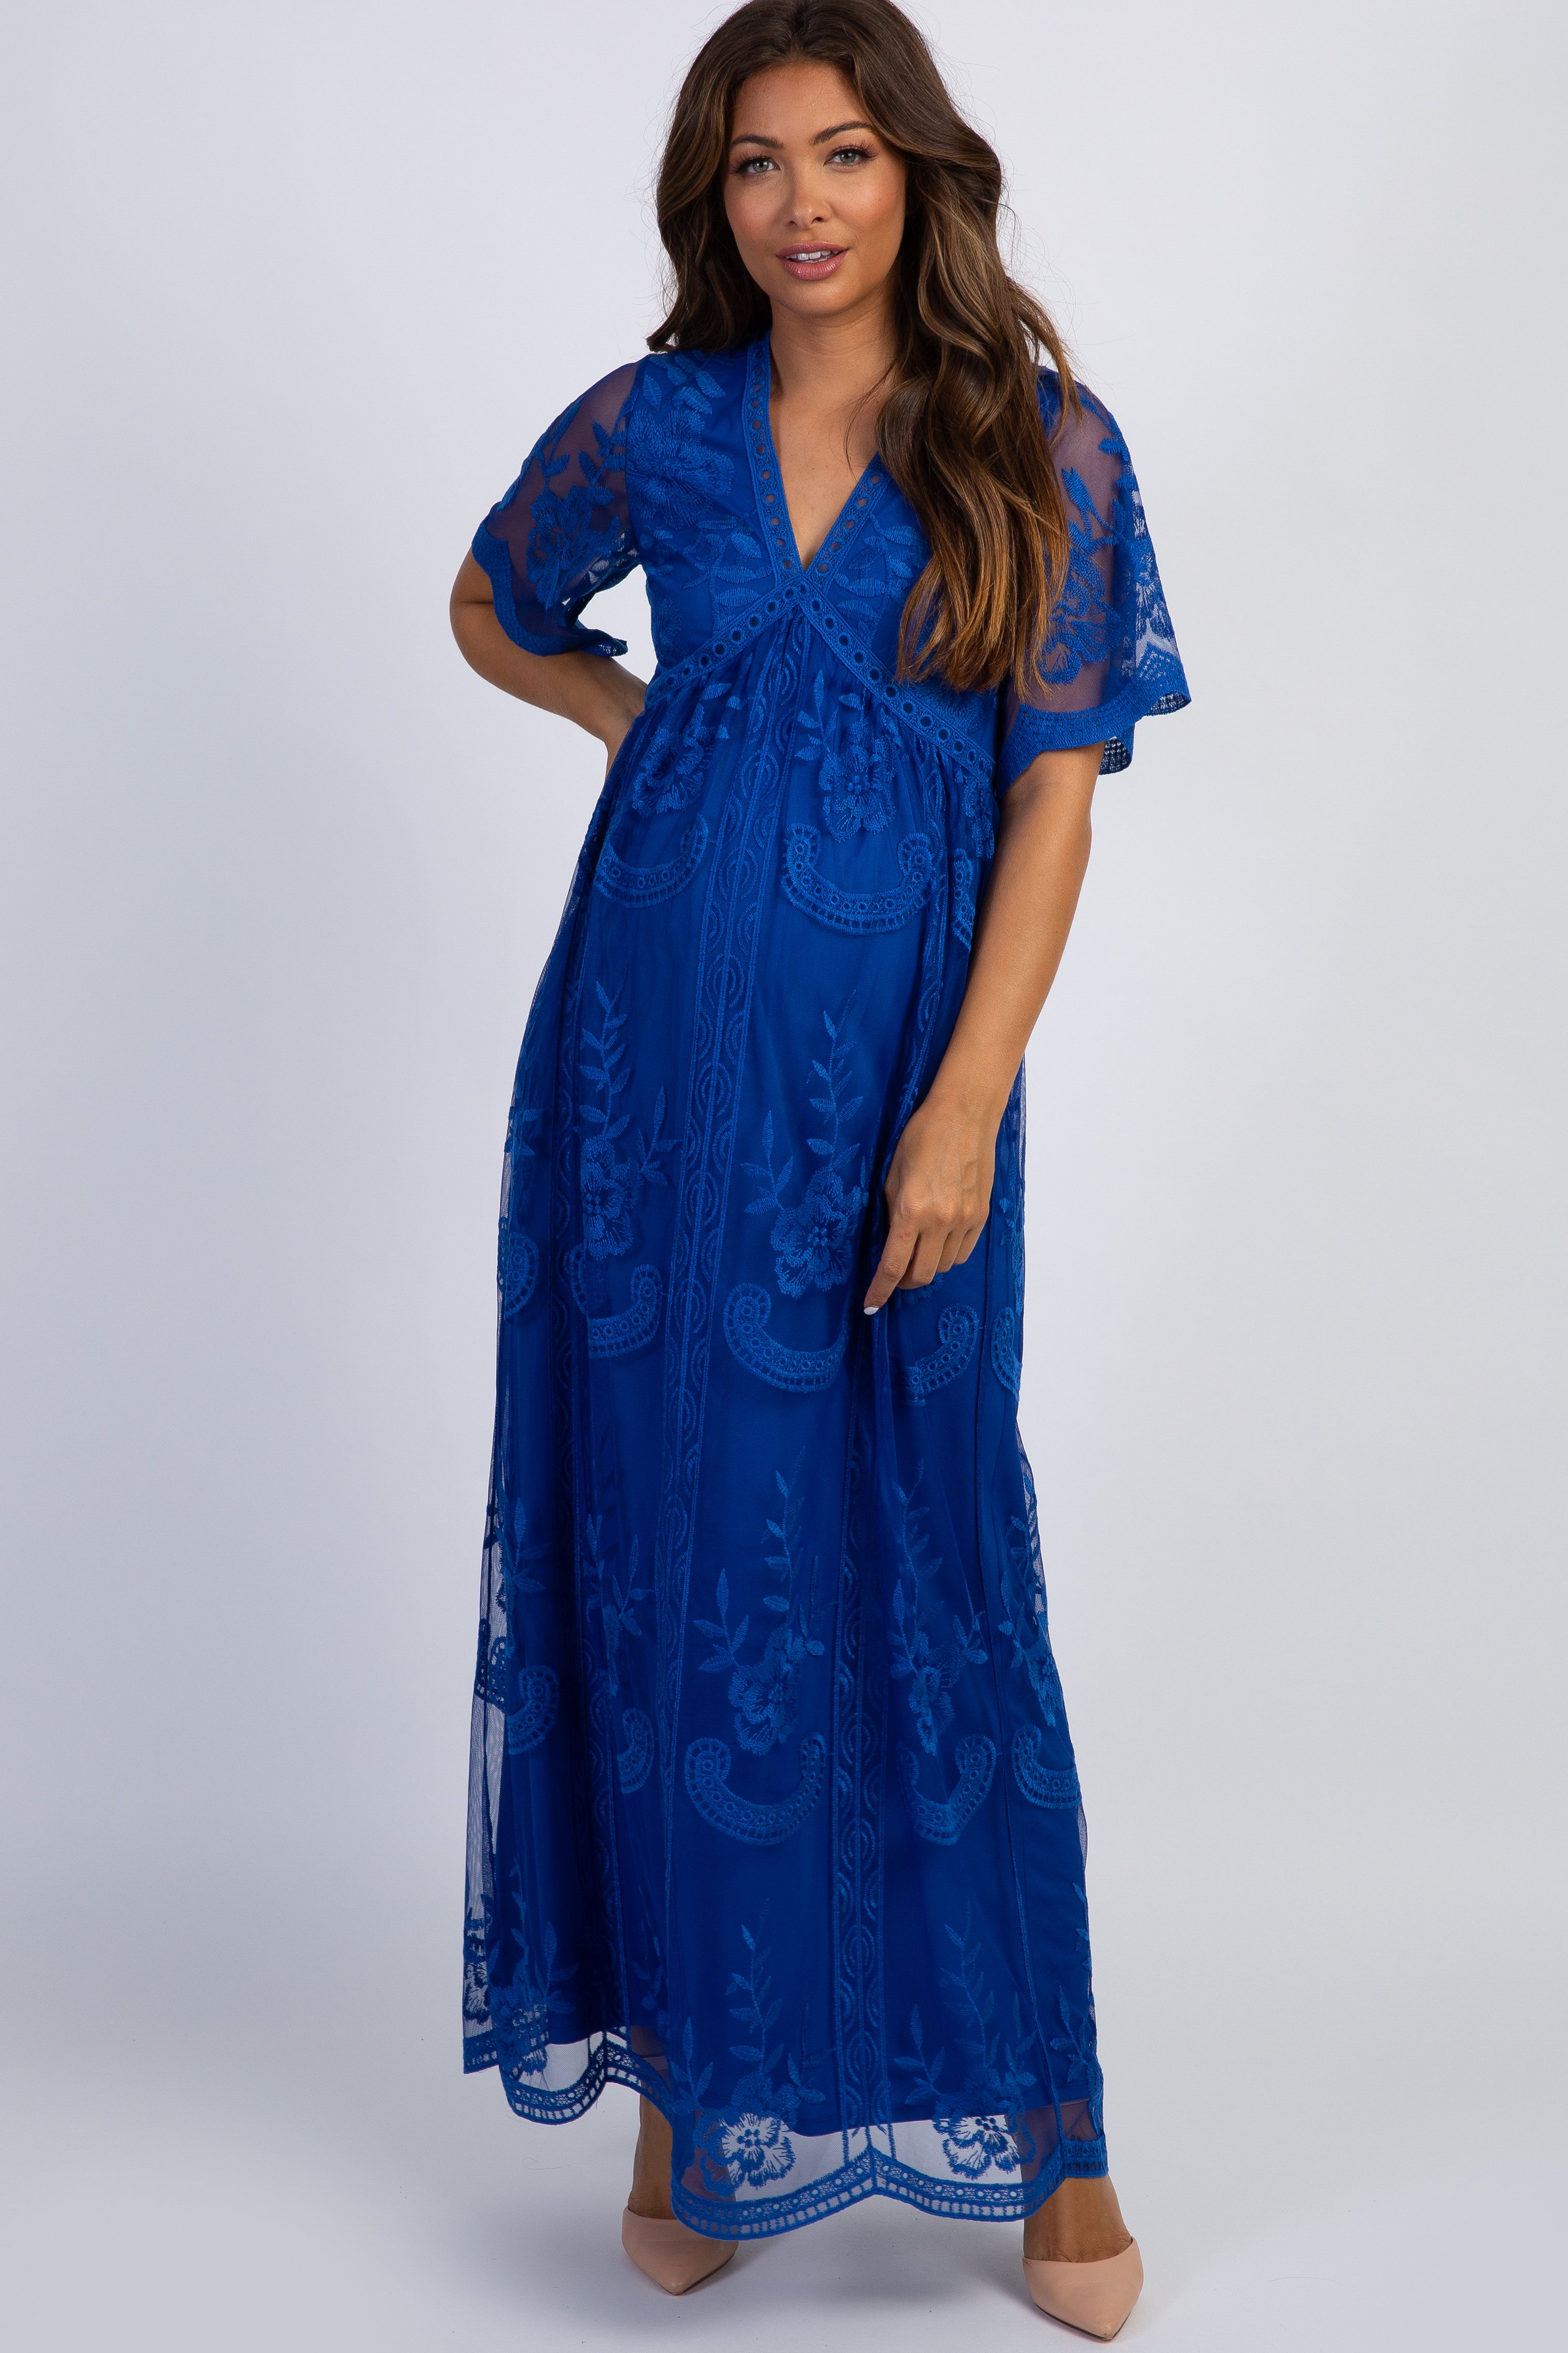 Royal Blue Lace Mesh Overlay Maternity Maxi Dress Pinkblush 